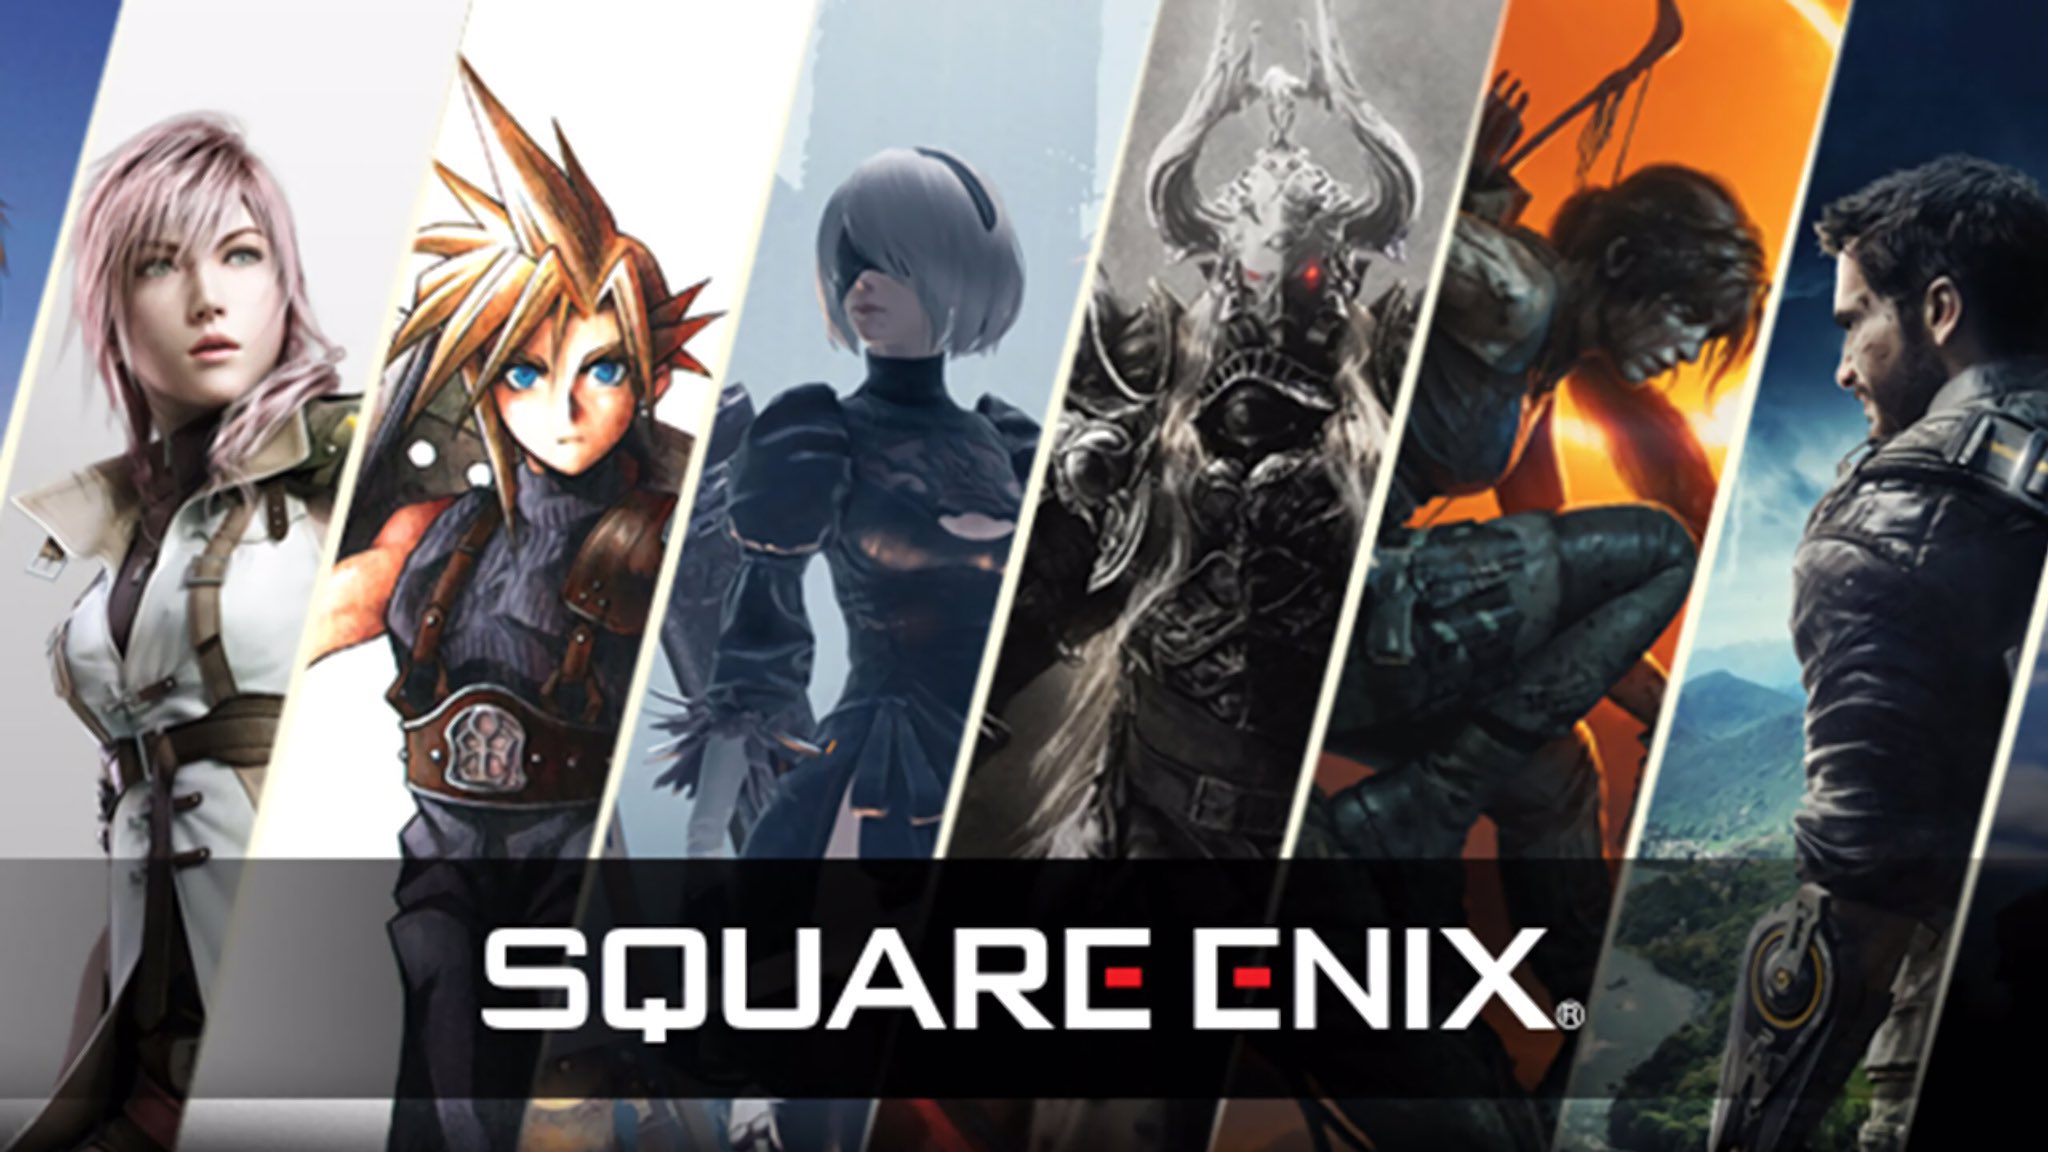 Square Enix Members' Coming To America